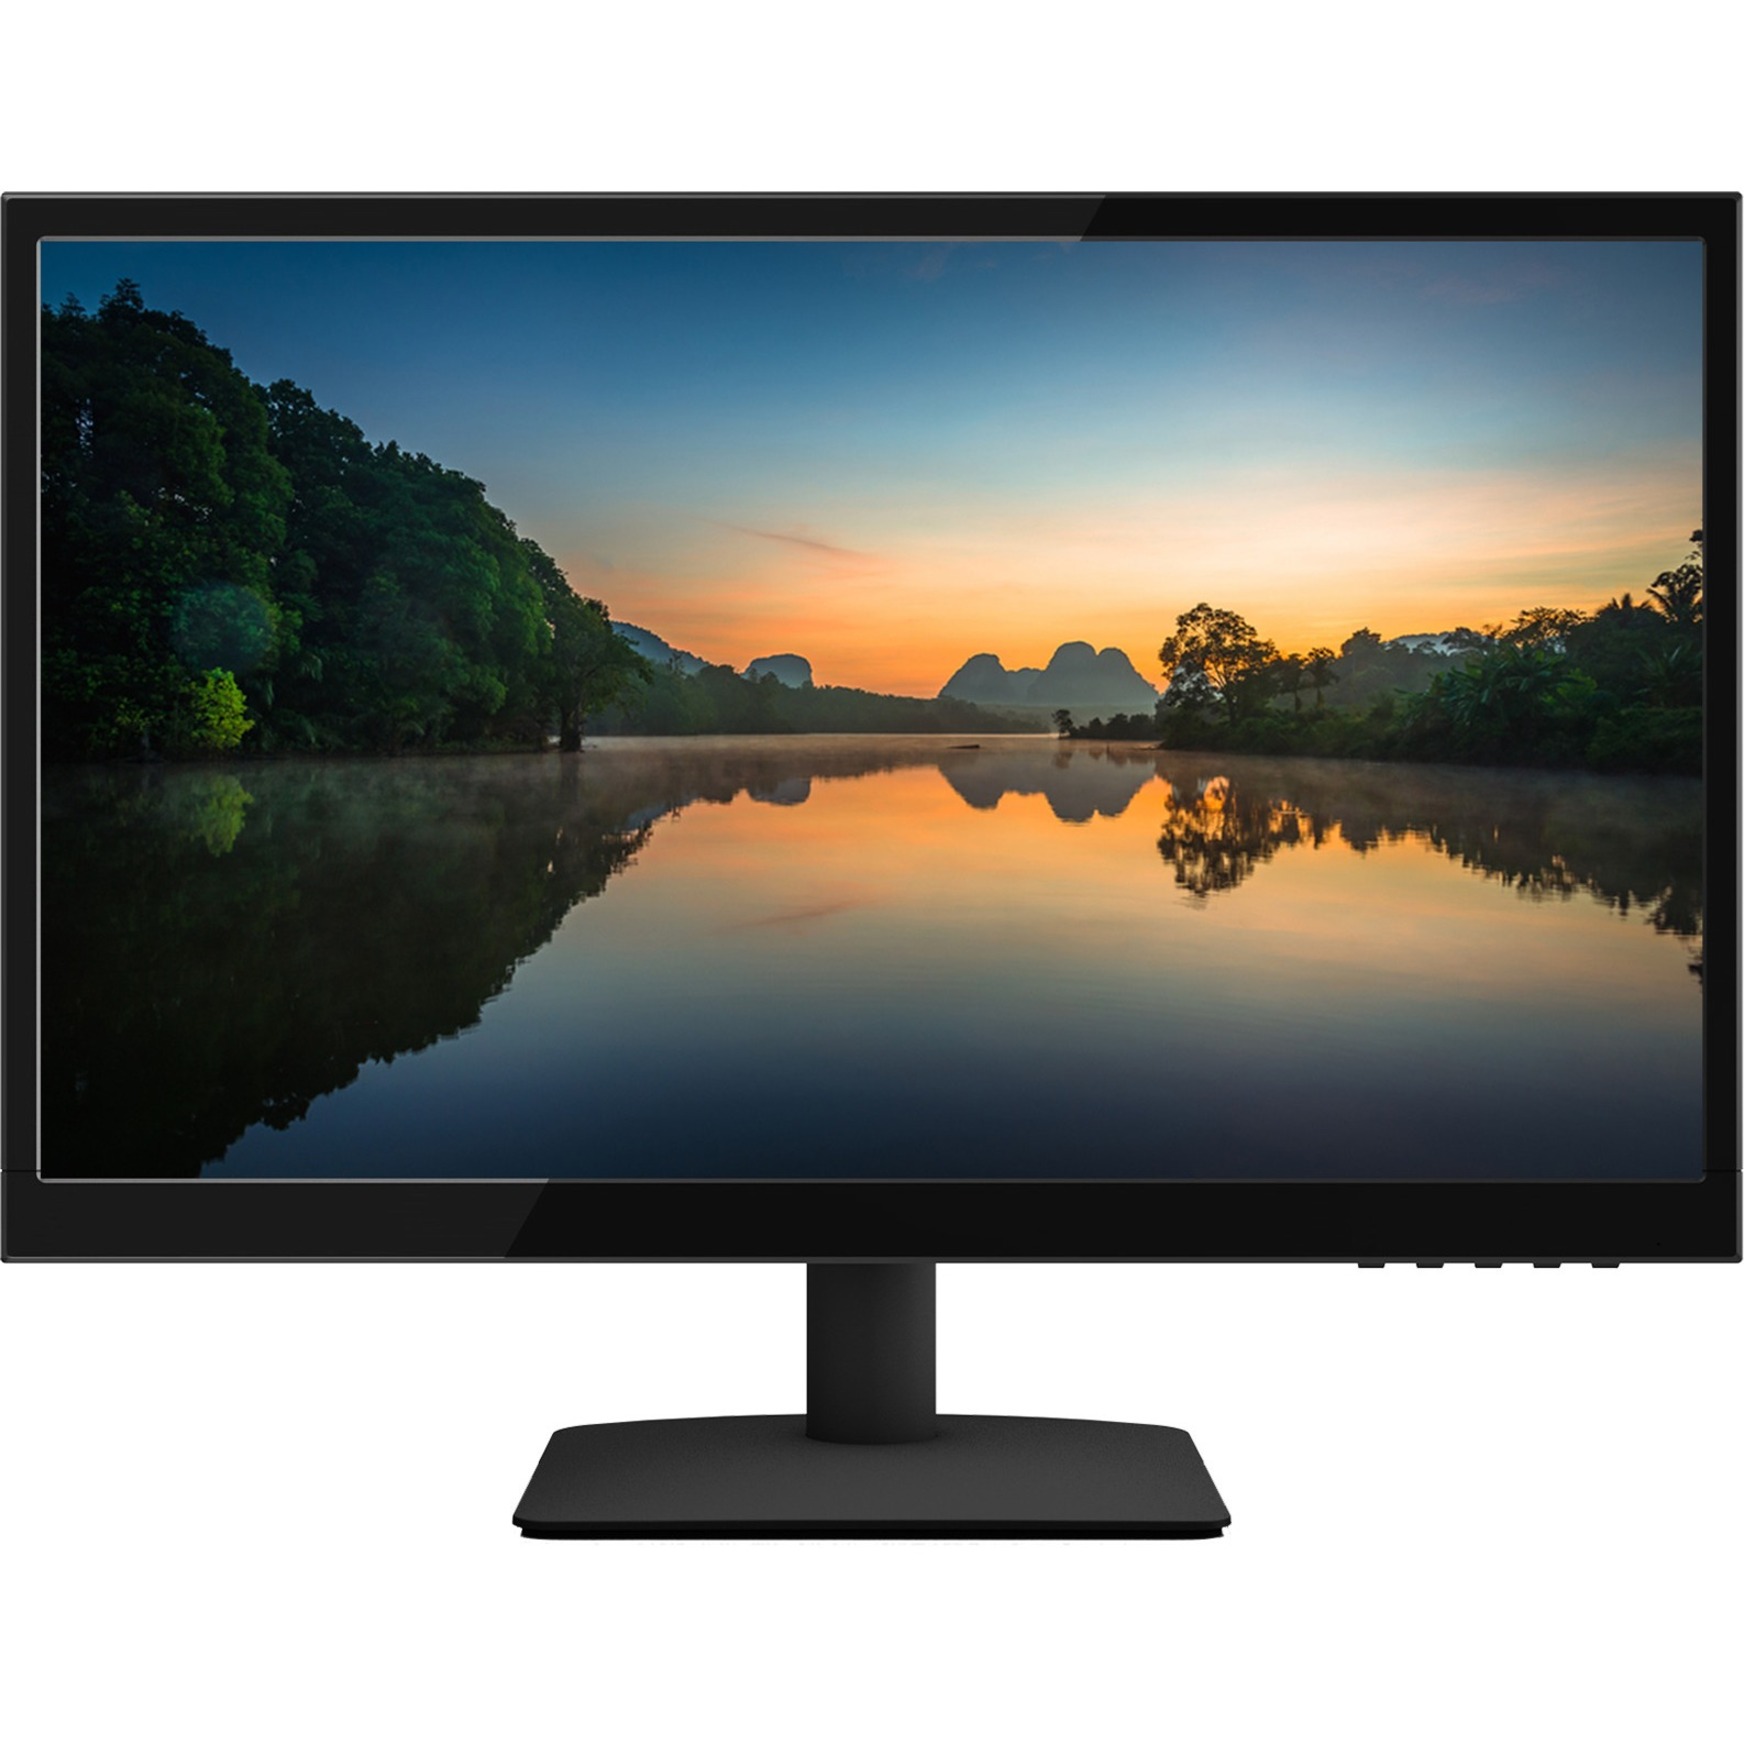 Planar PLL2250MW 22" Class Full HD LCD Monitor, 16:9, Black - image 4 of 4